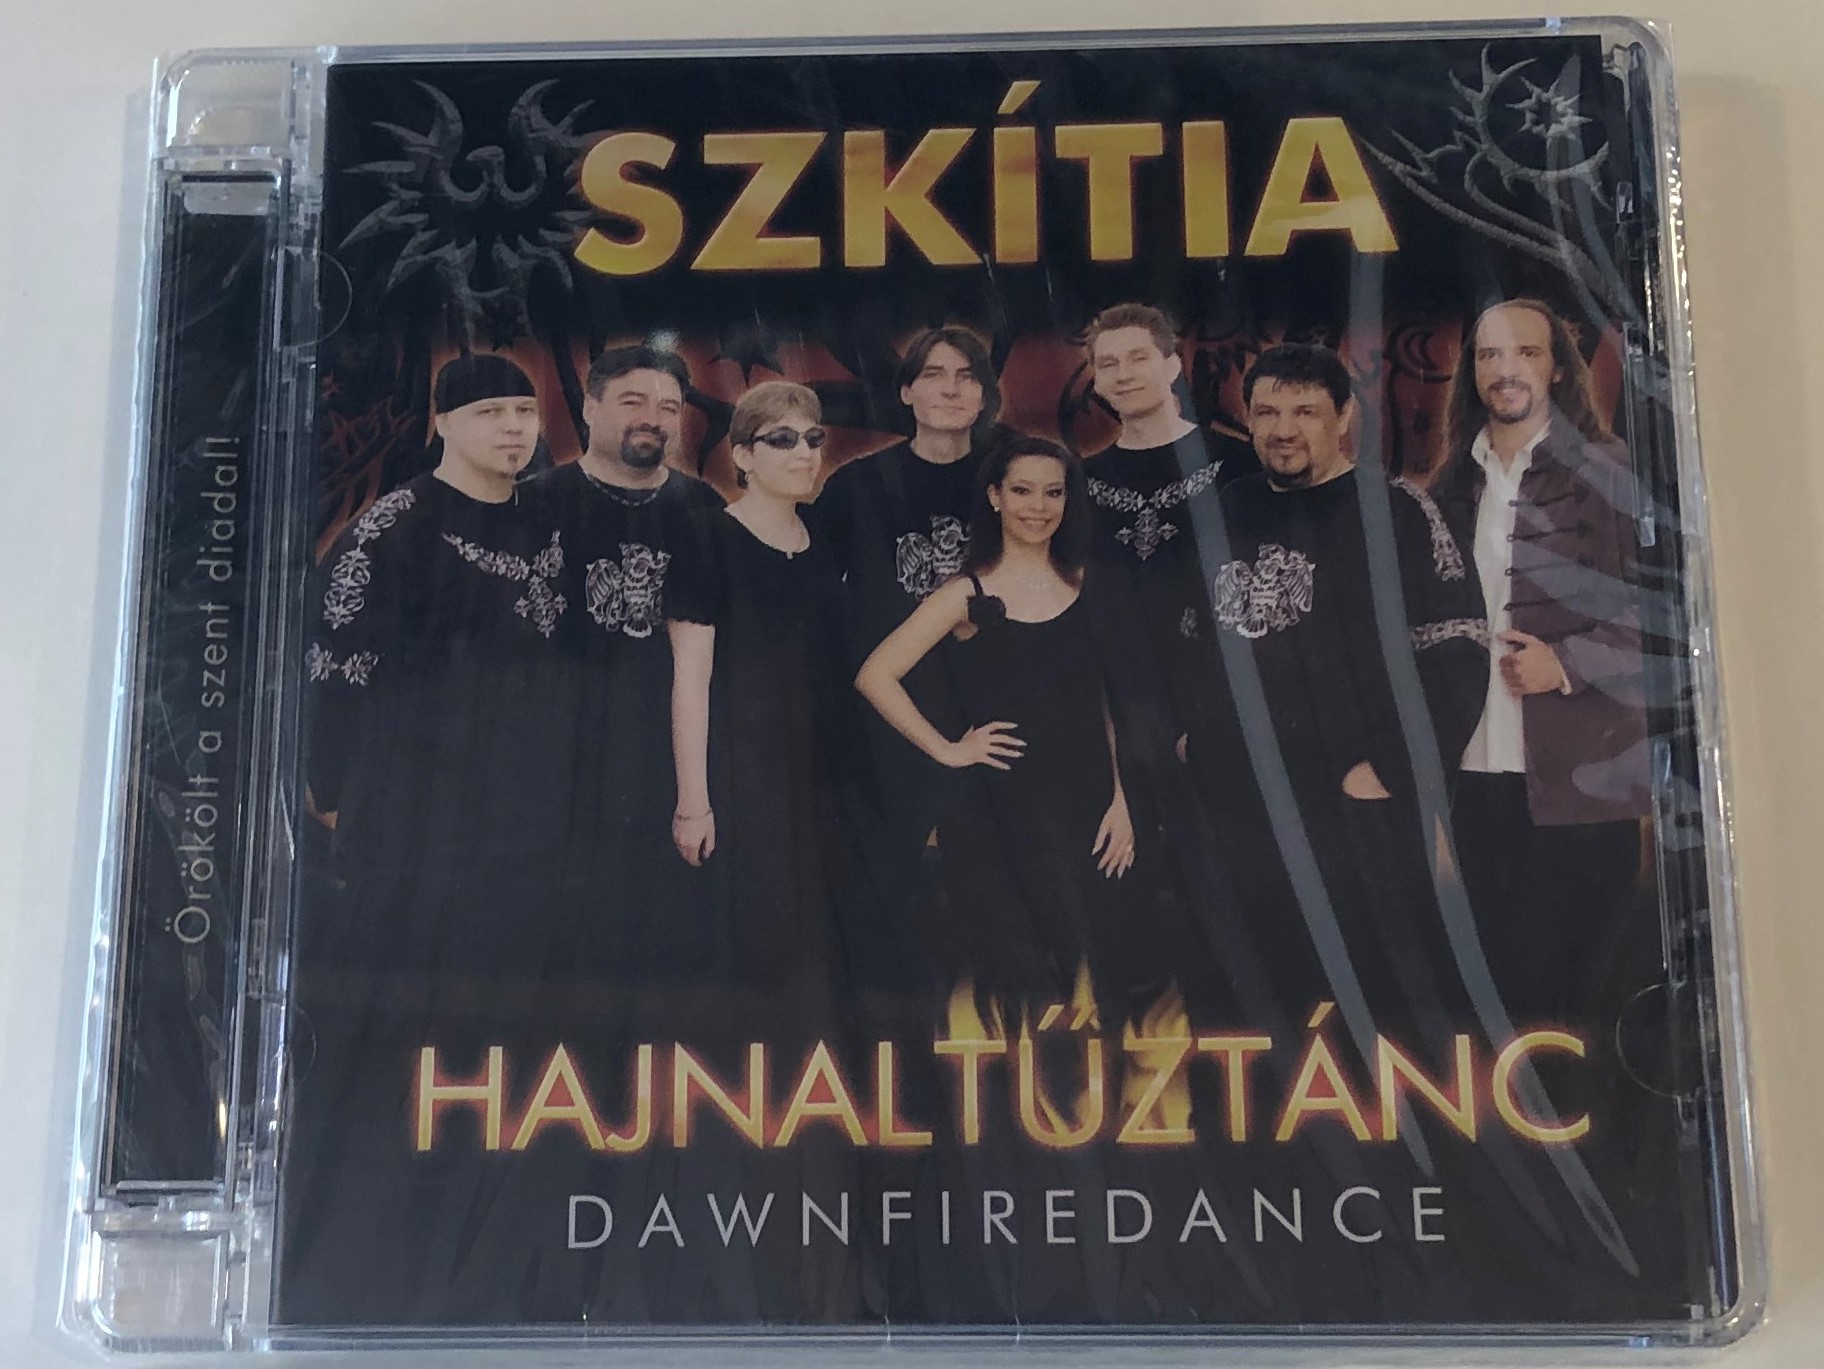 szk-tia-hajnalt-zt-nc-downfiredance-periferic-records-audio-cd-2010-bgcd-208-1-.jpg